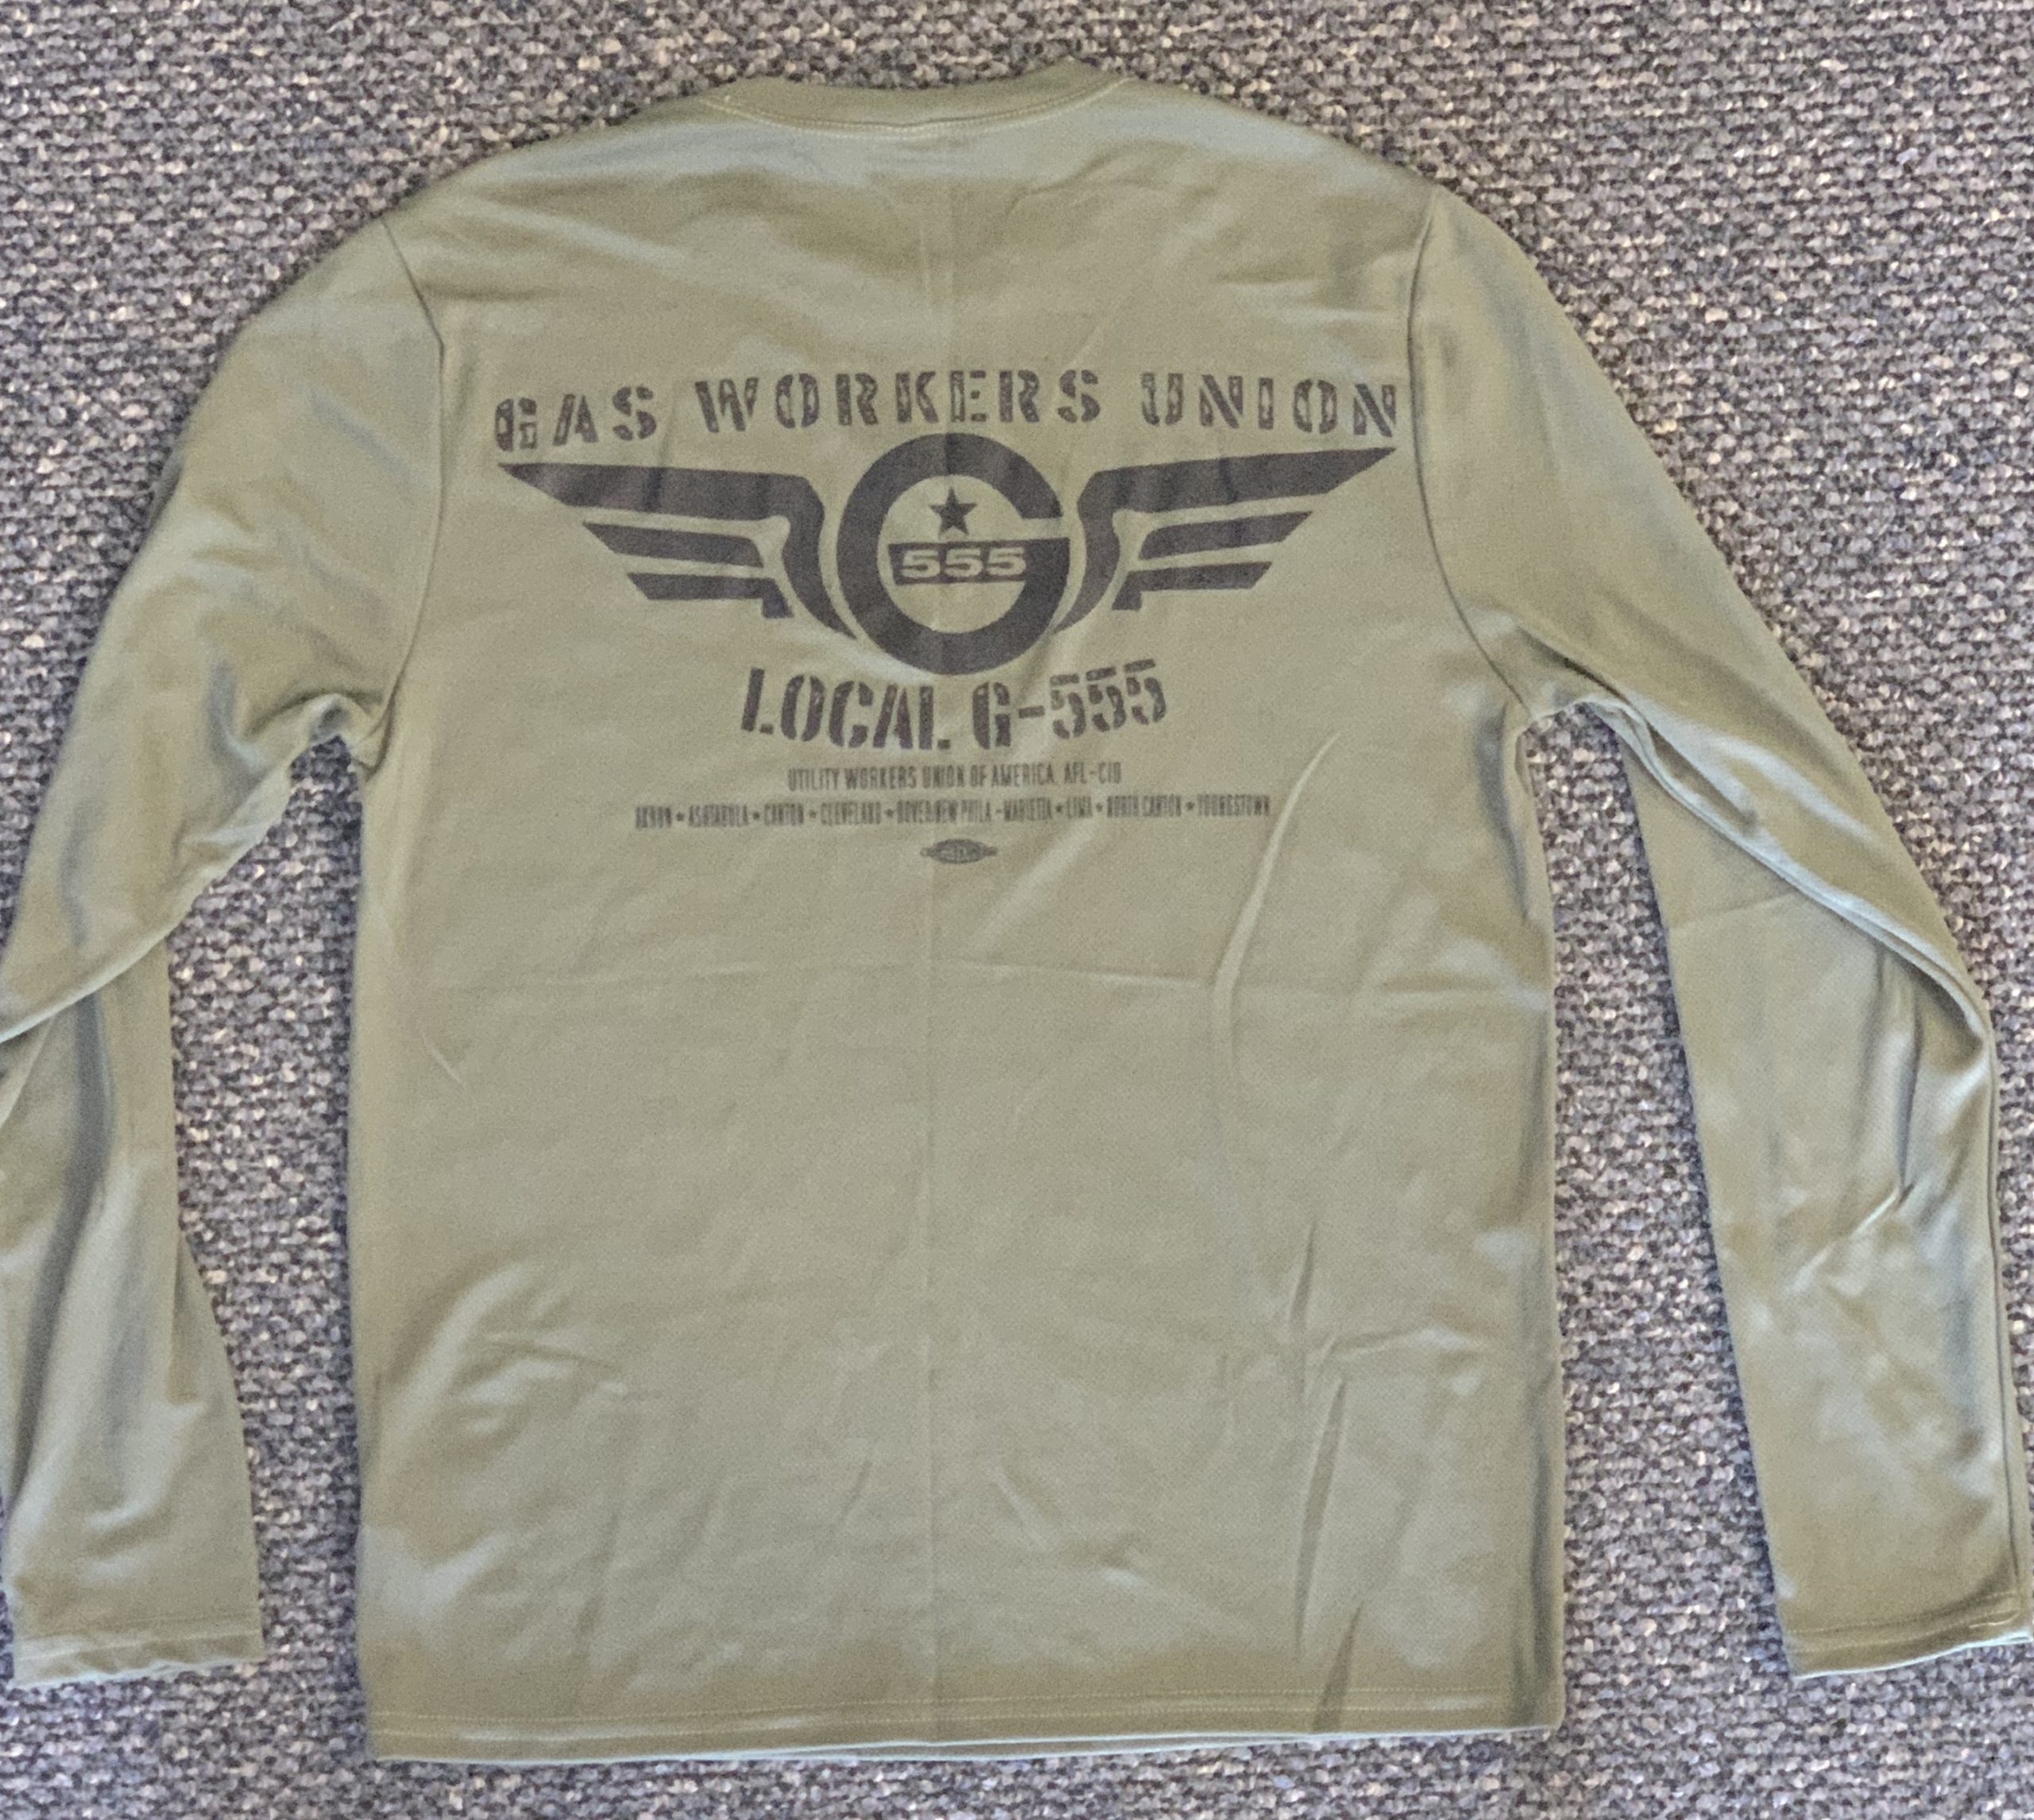 Elite Fan Shop Military Long Sleeve T Shirt Sand